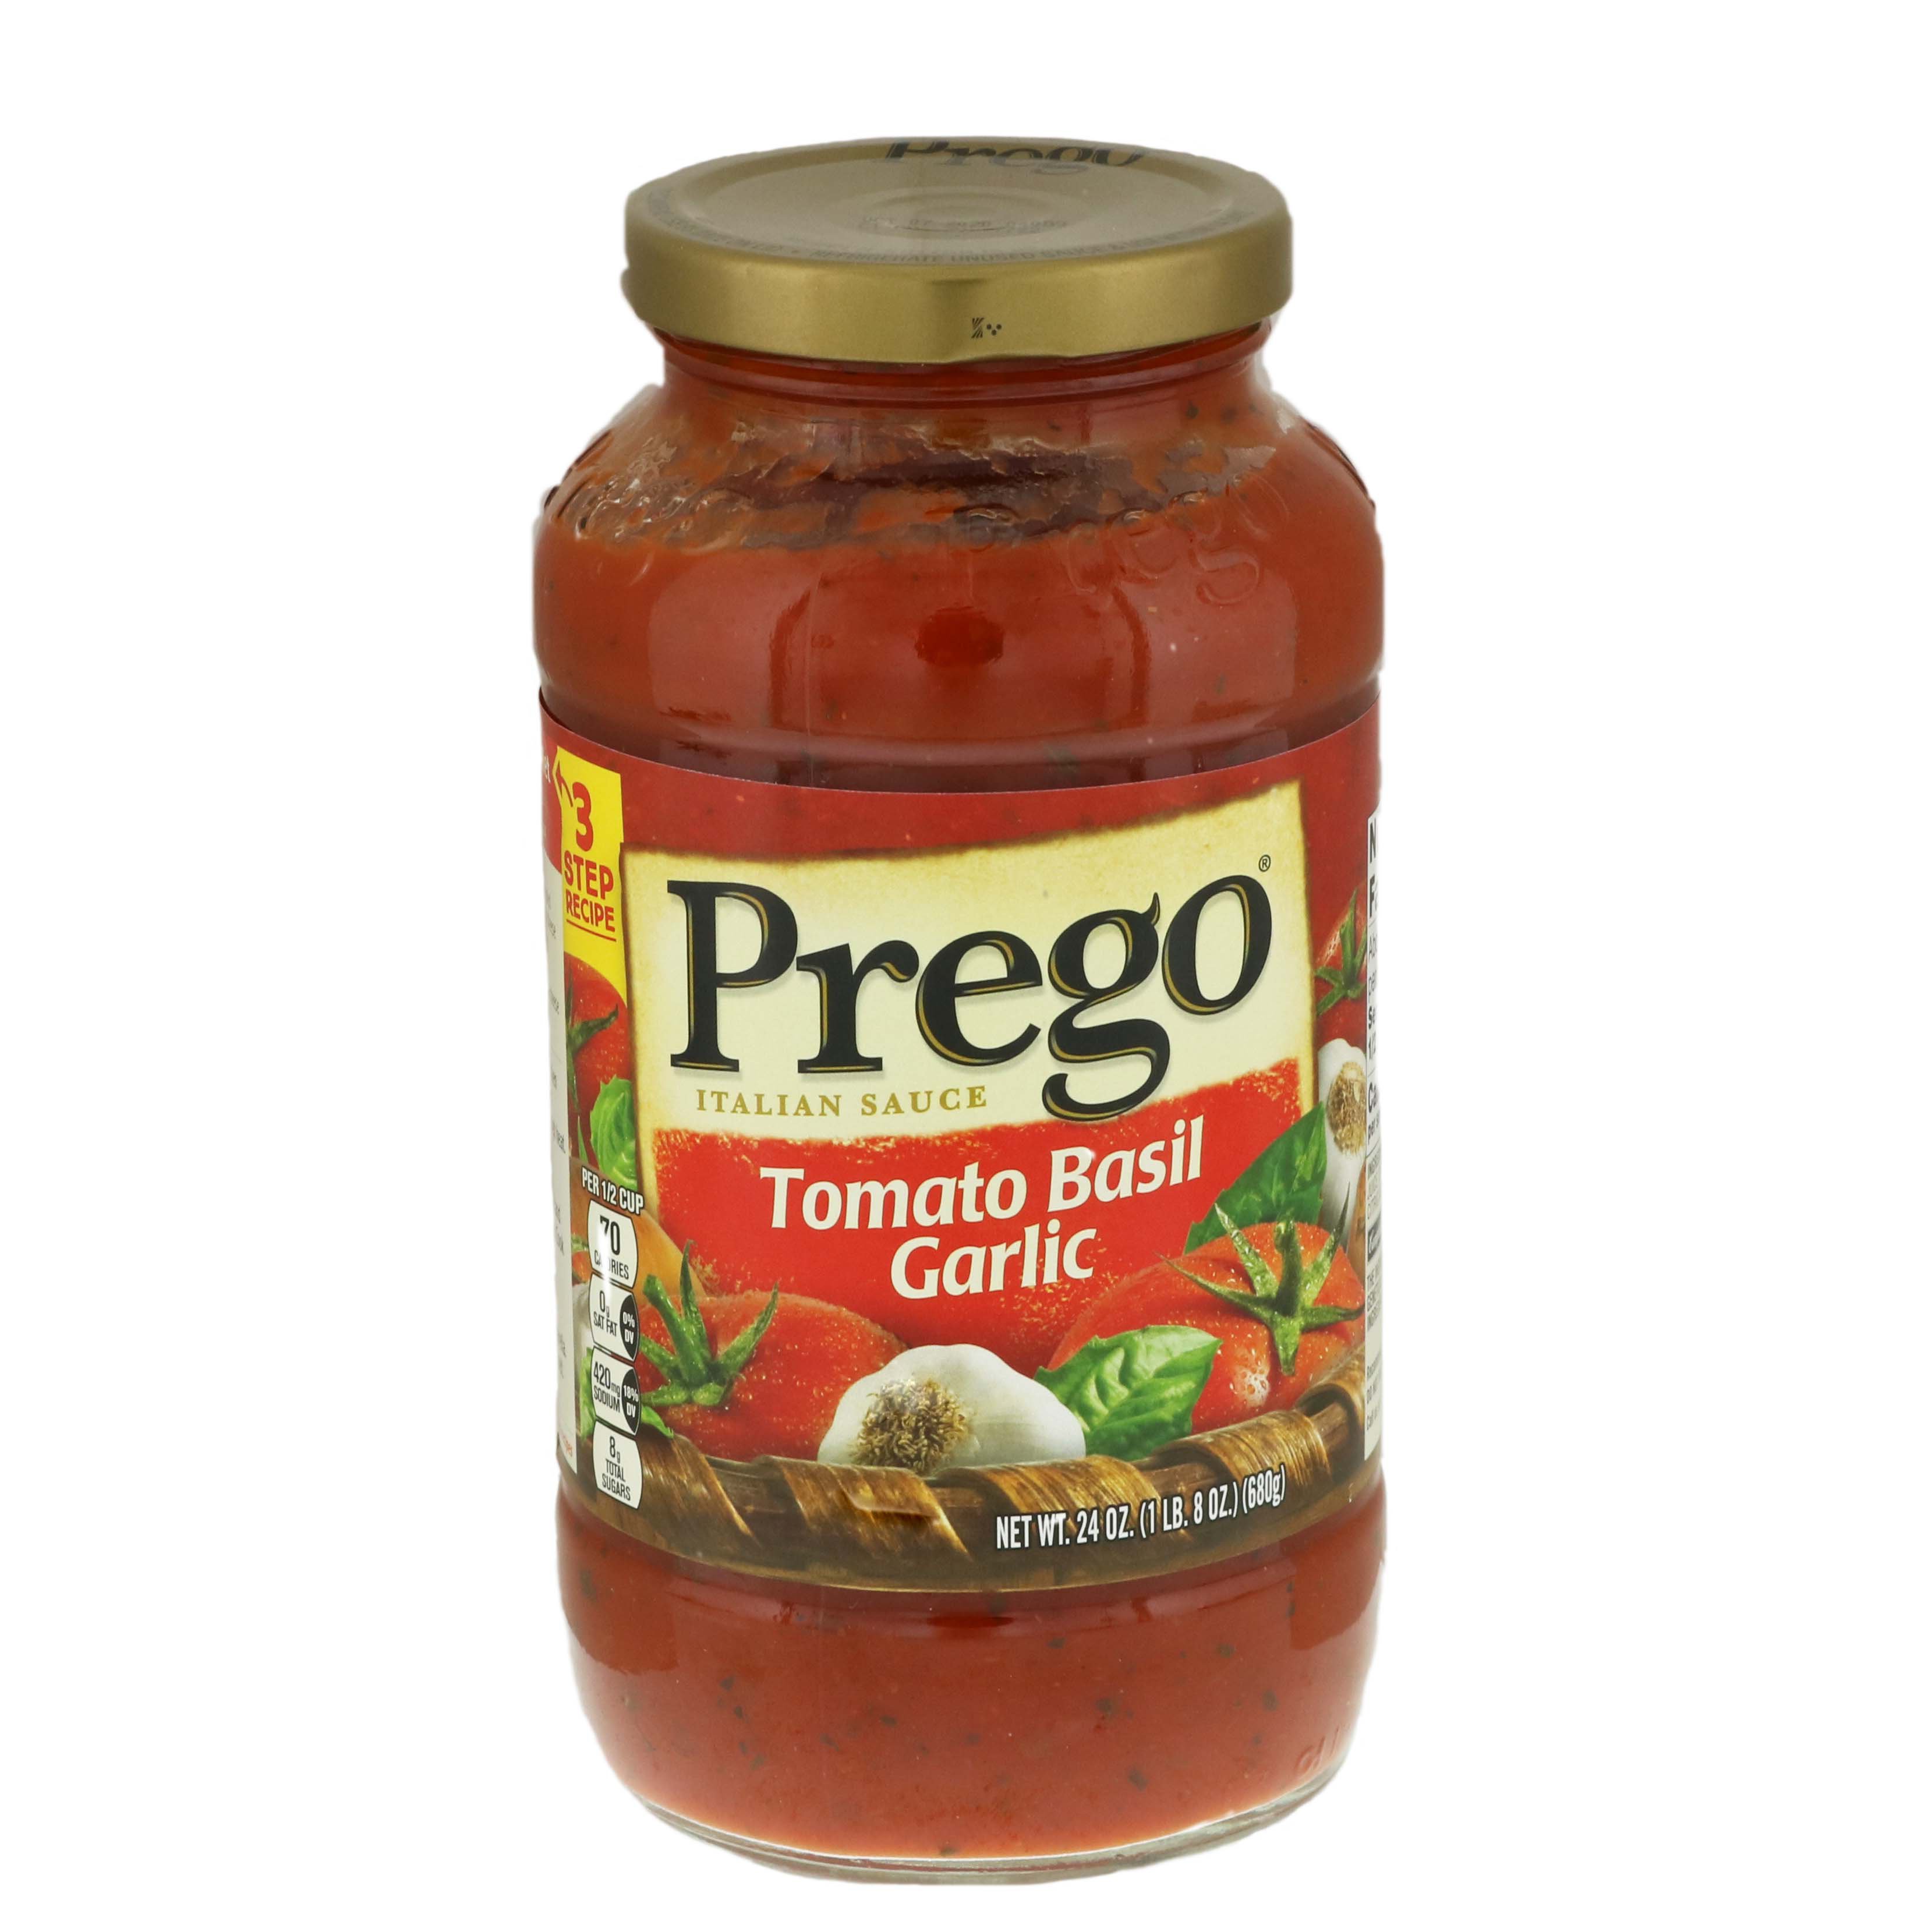 Prego Pasta Sauce Review